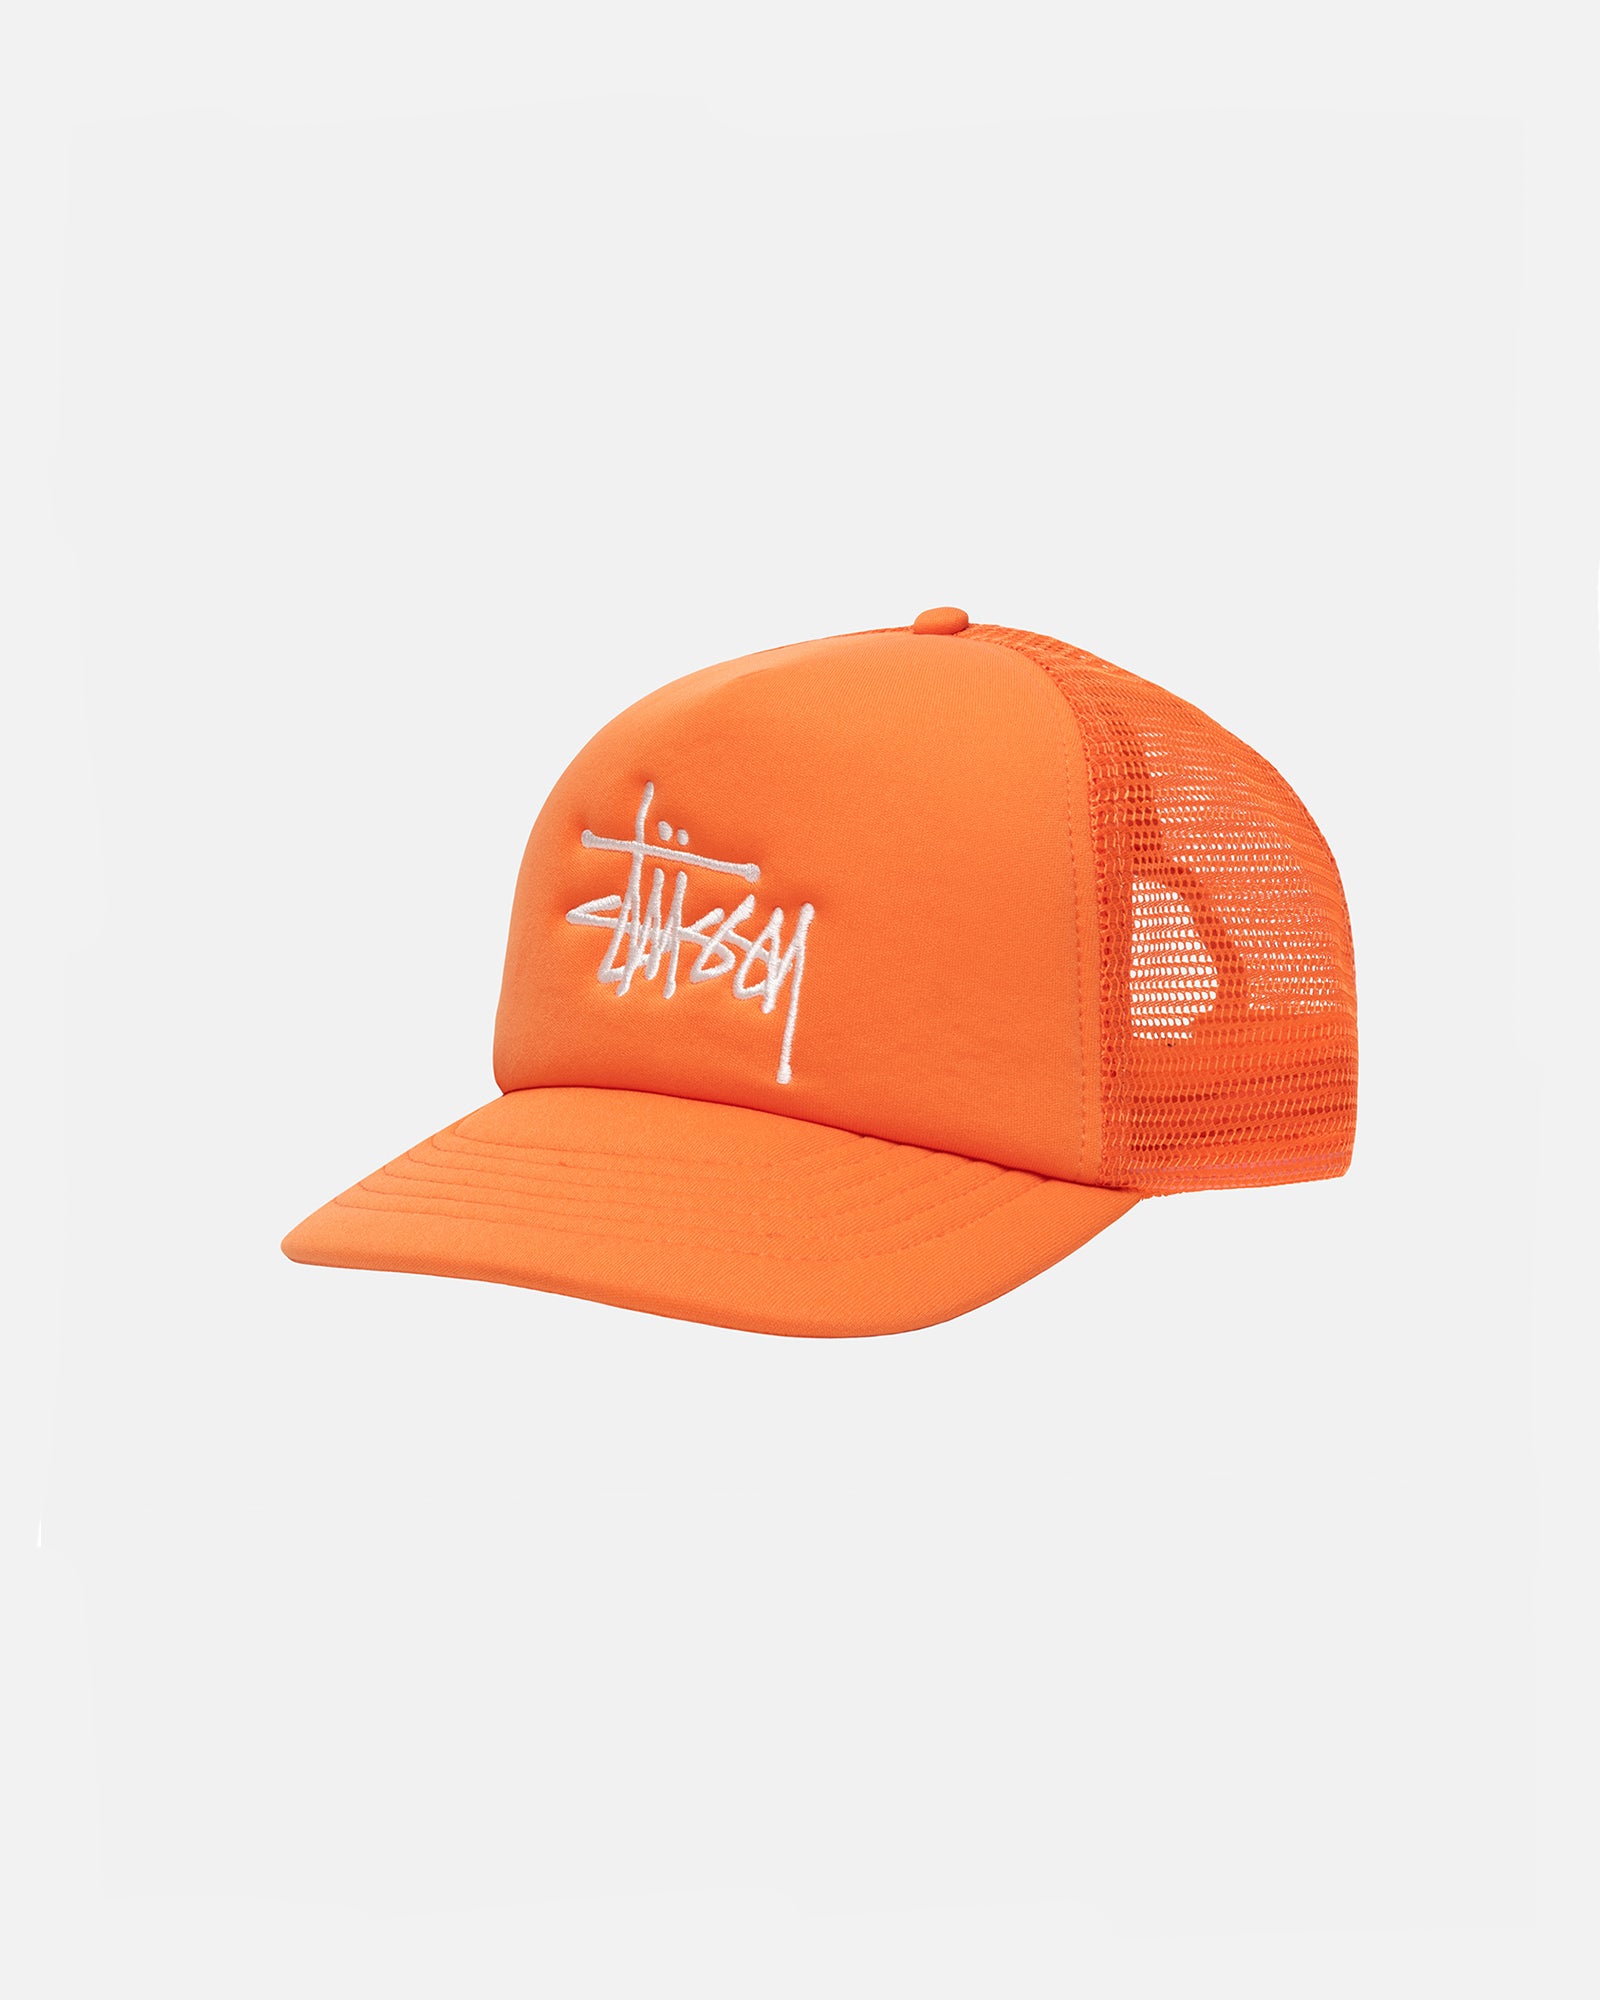 Stüssy Trucker Big Basic Snapback Orange Headwear